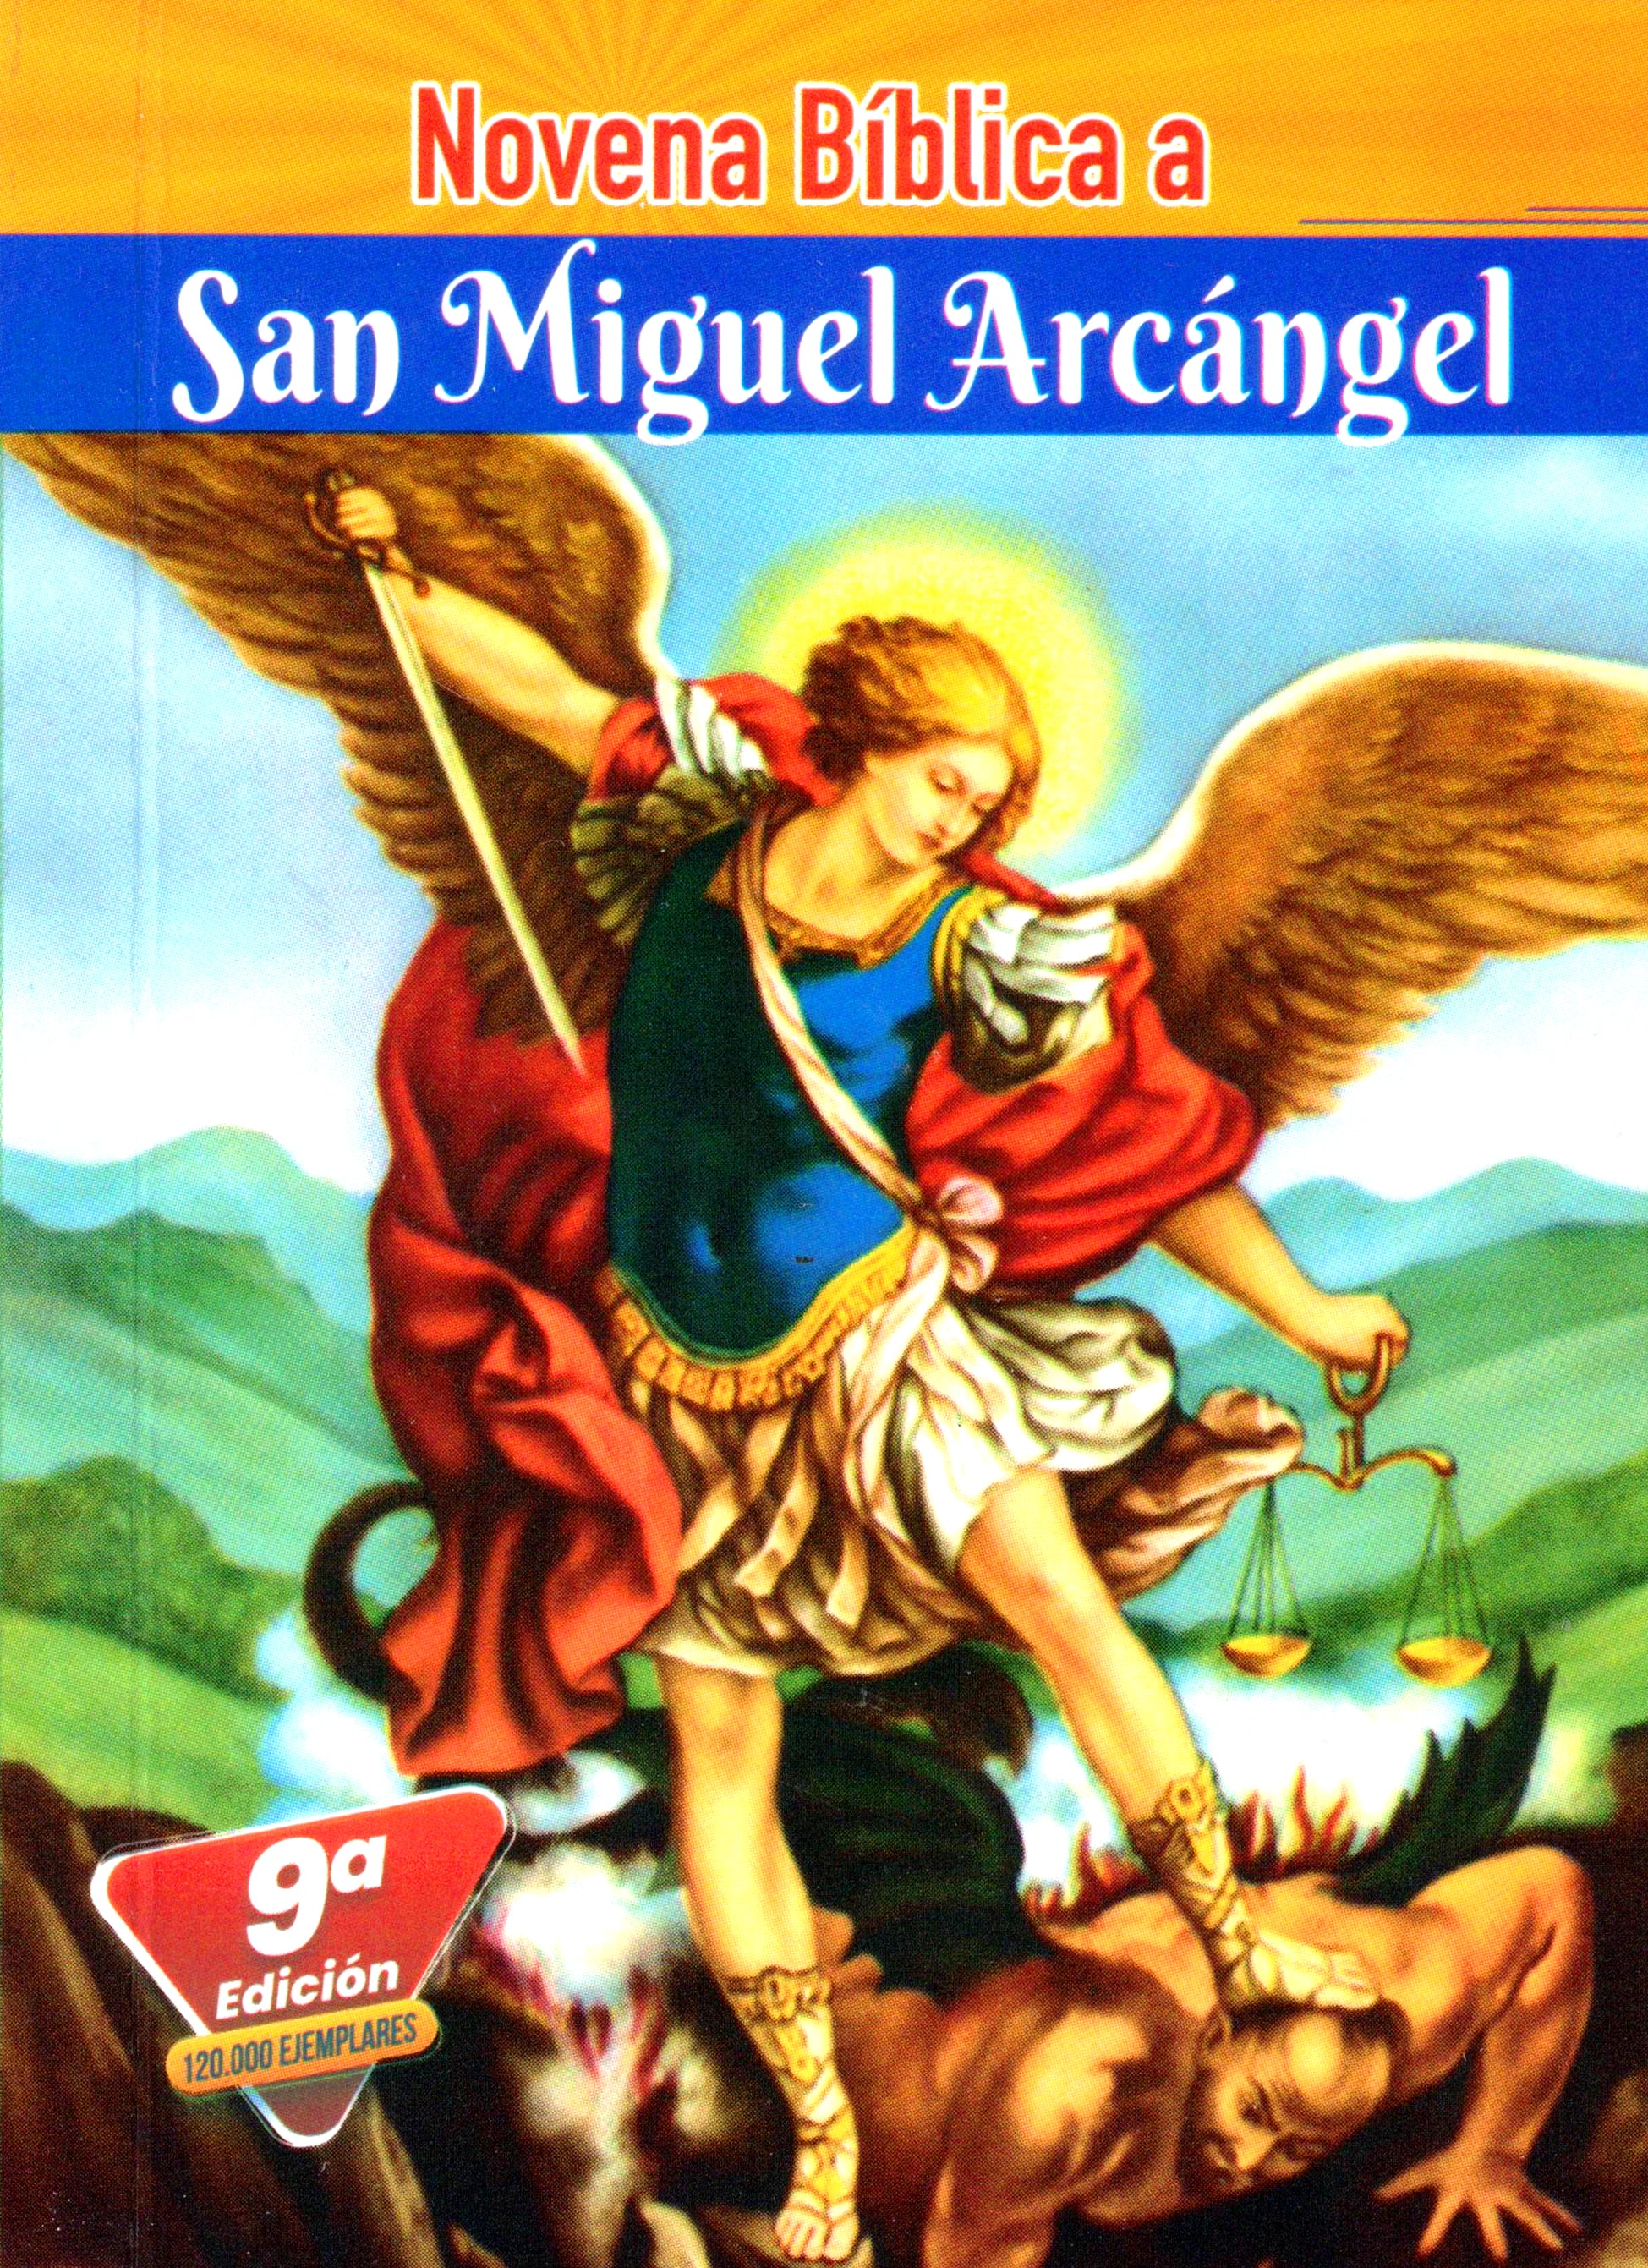 Novena Bíblica a San Miguel Arcángel